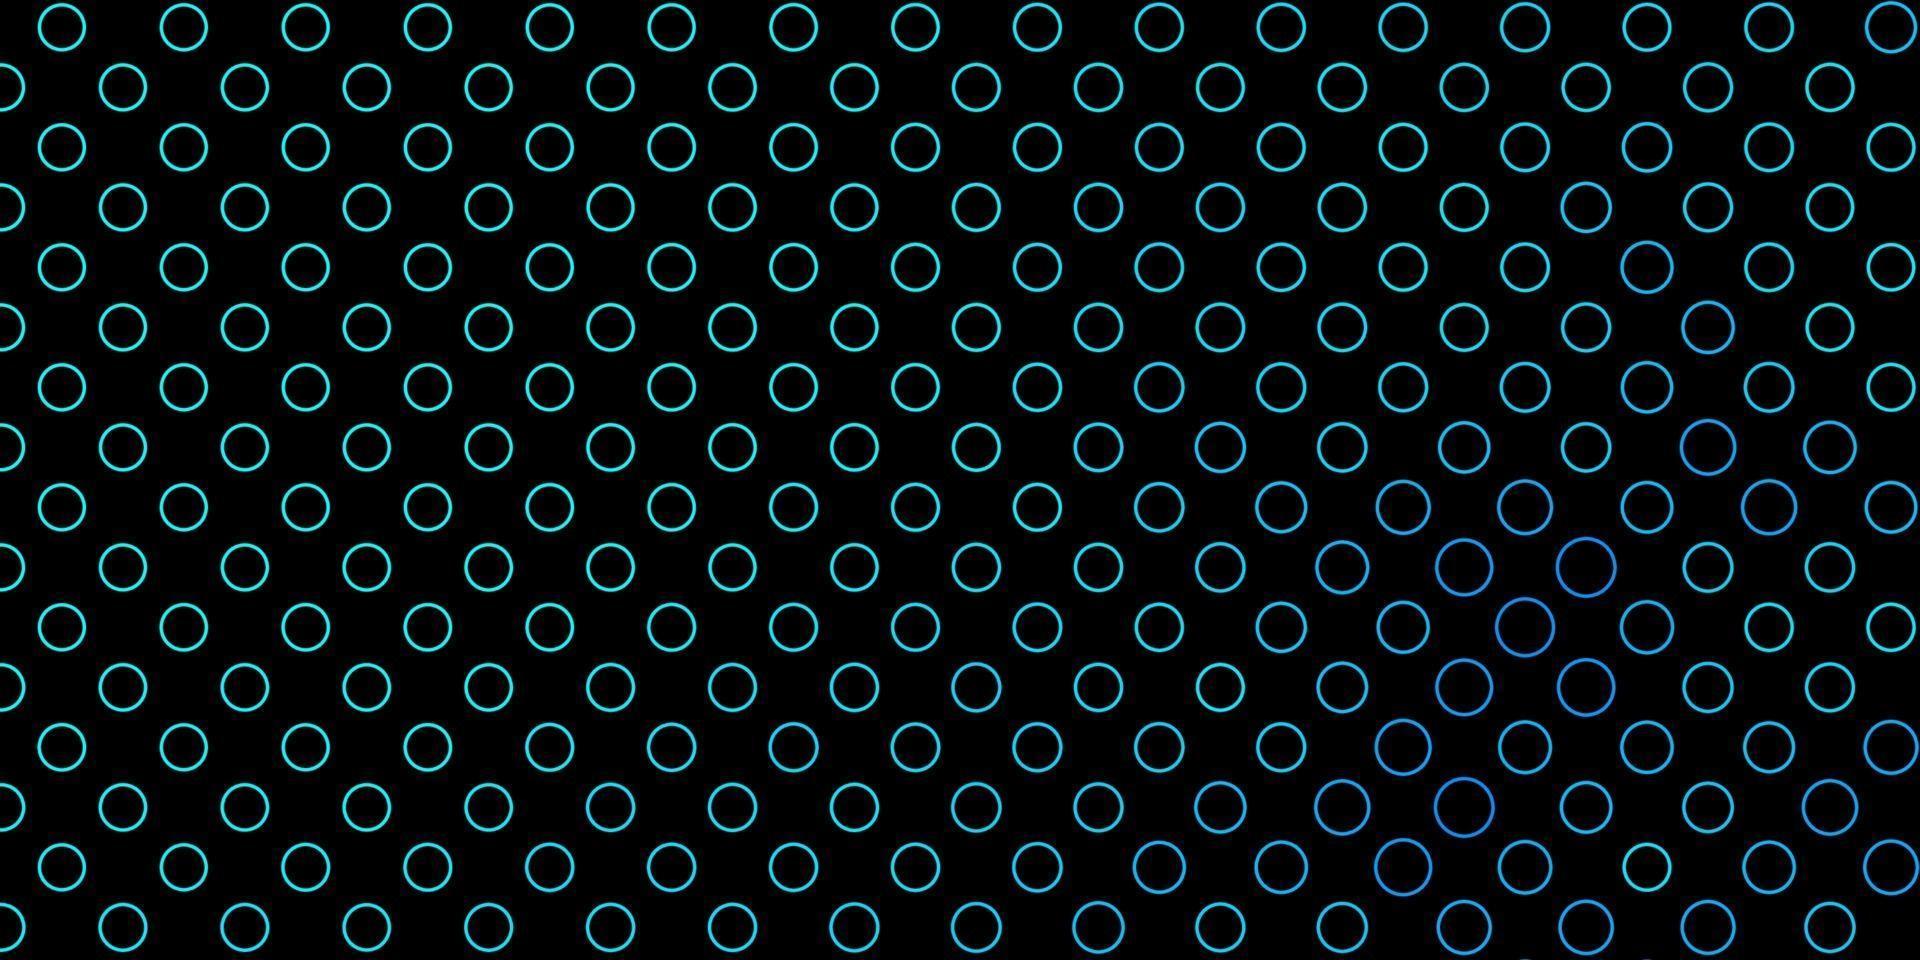 modelo de vetor azul escuro com círculos.